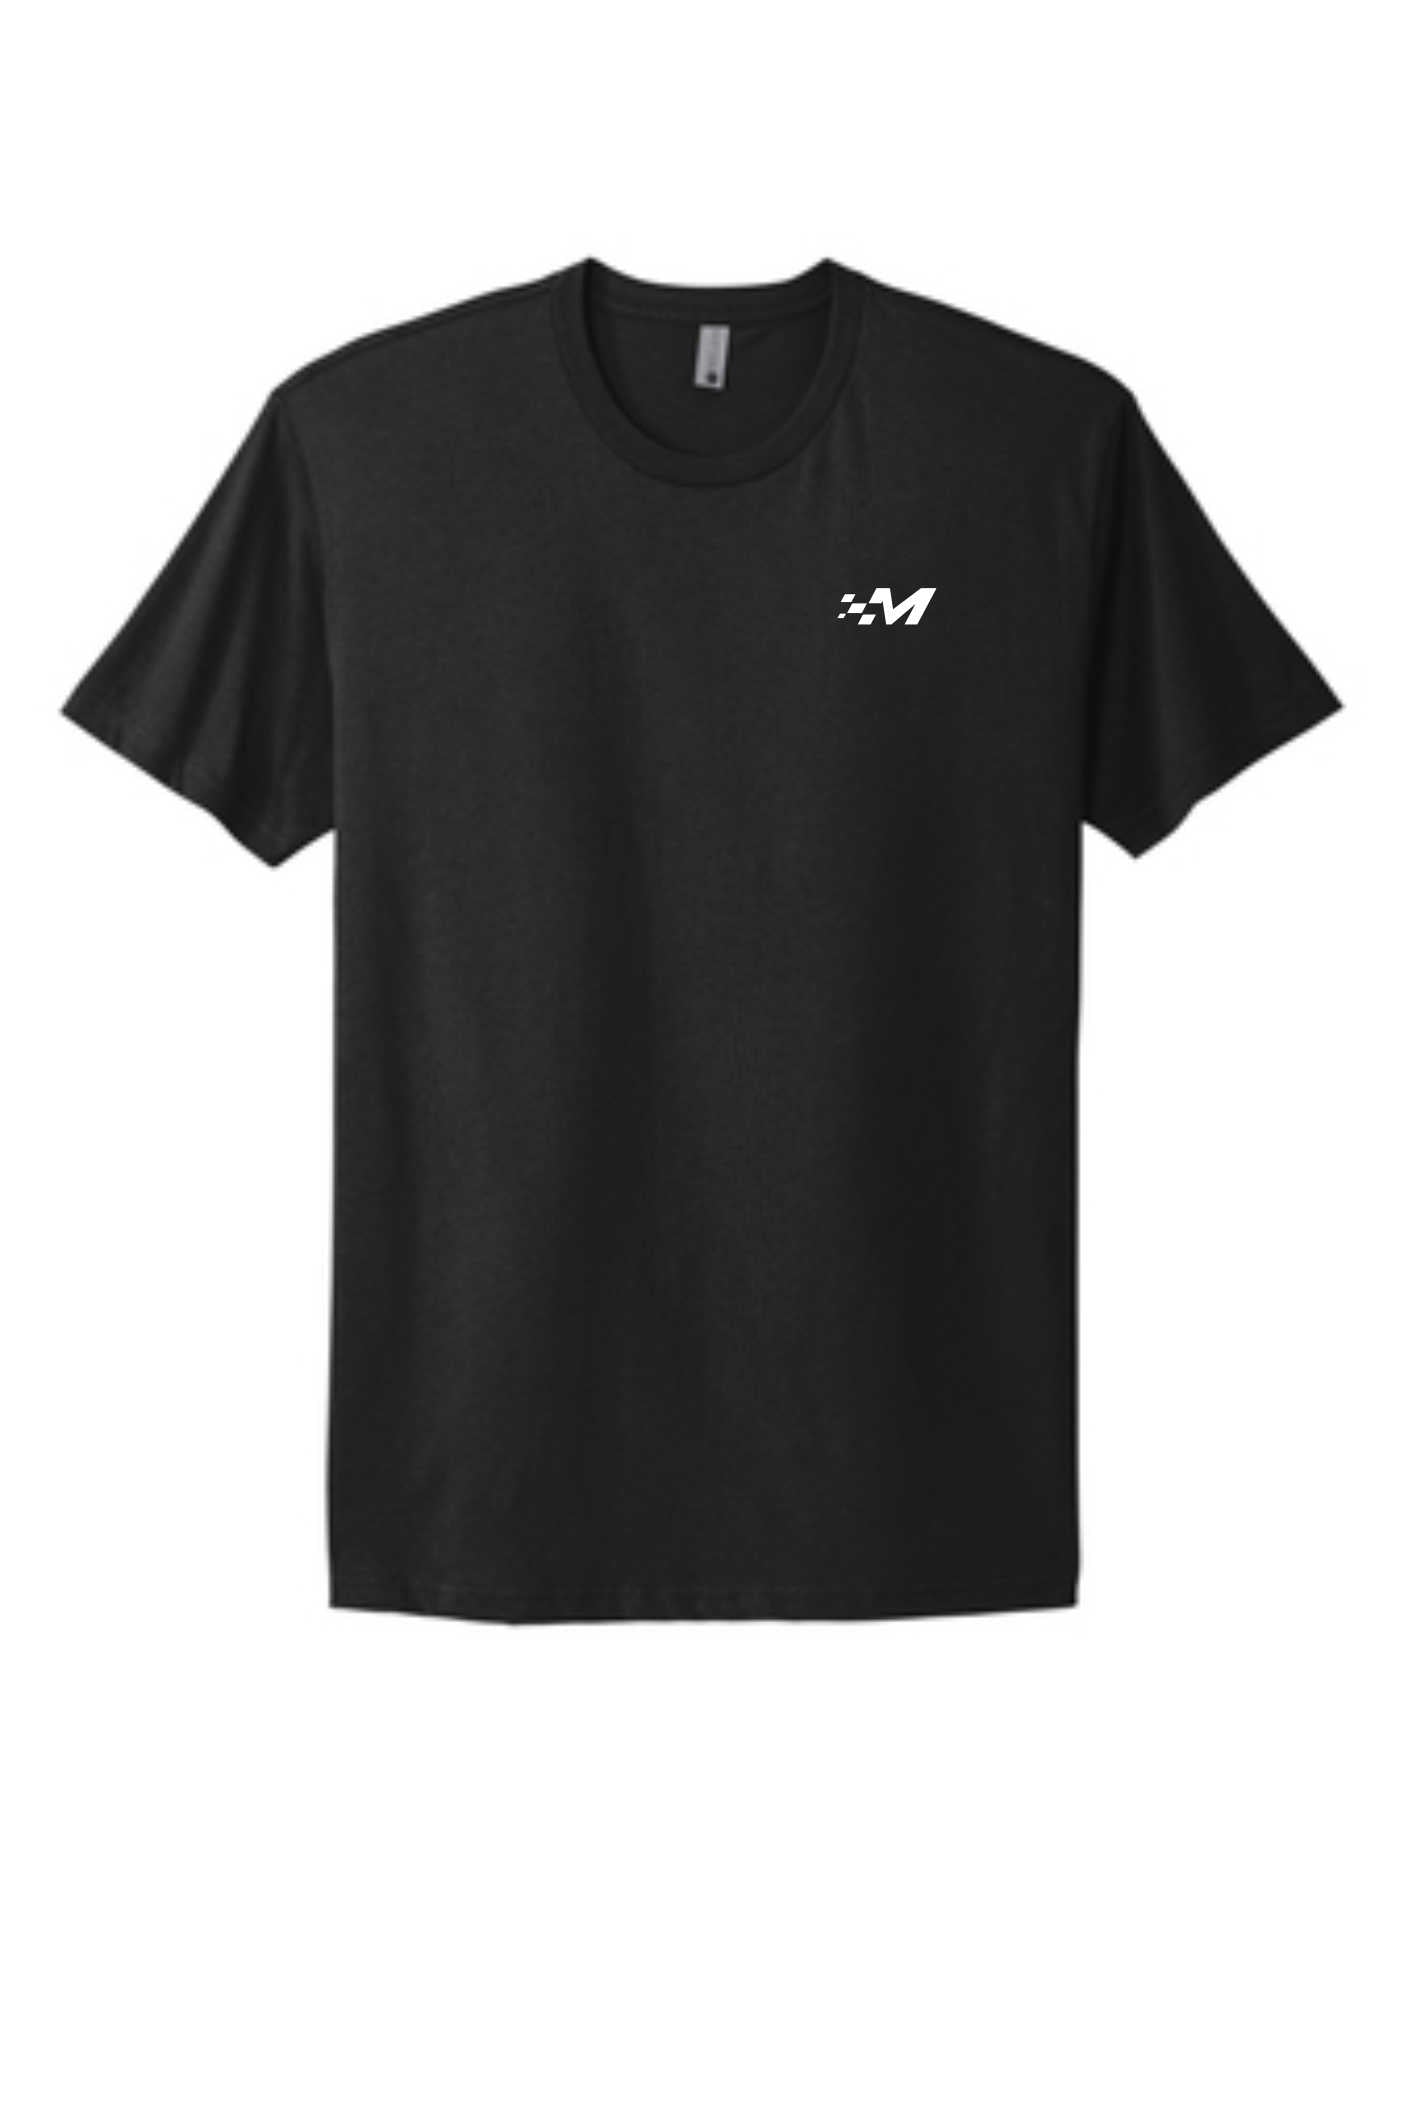 E92 M3 "Generations" 2023 Design - Short Sleeve T-Shirt - Black